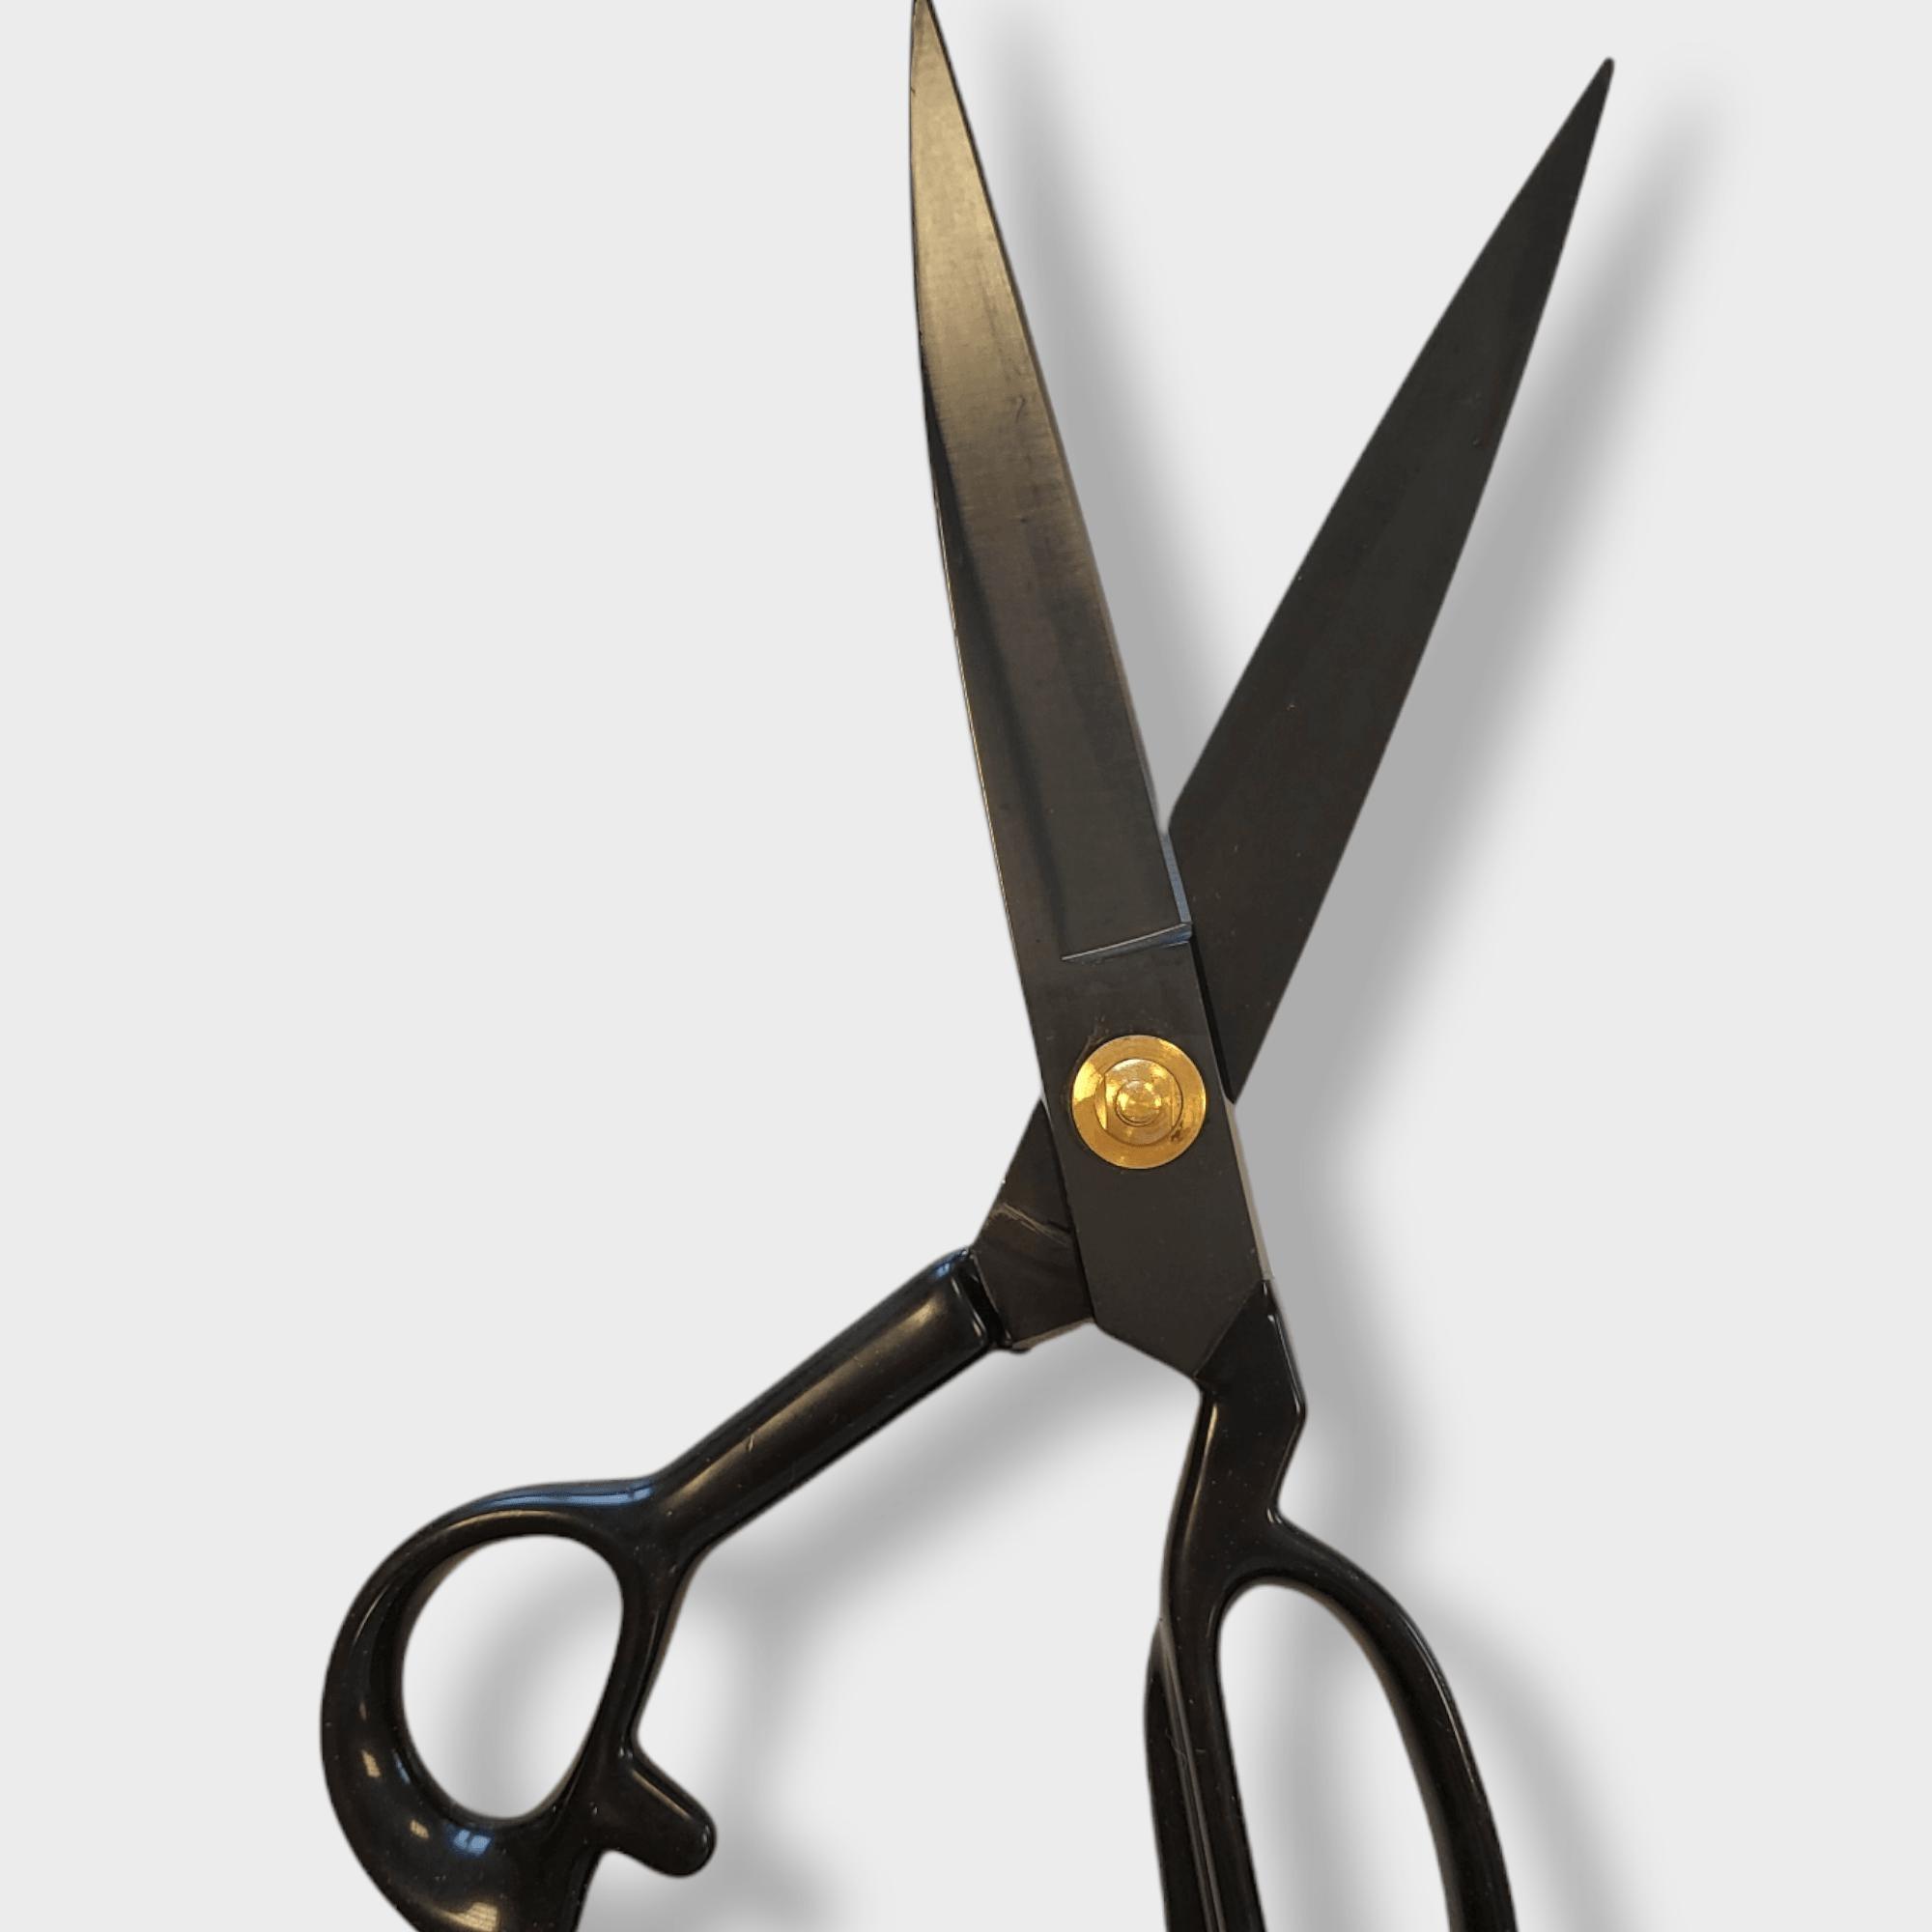 Heavy duty fabric scissors 11 inch - Tuftingshop